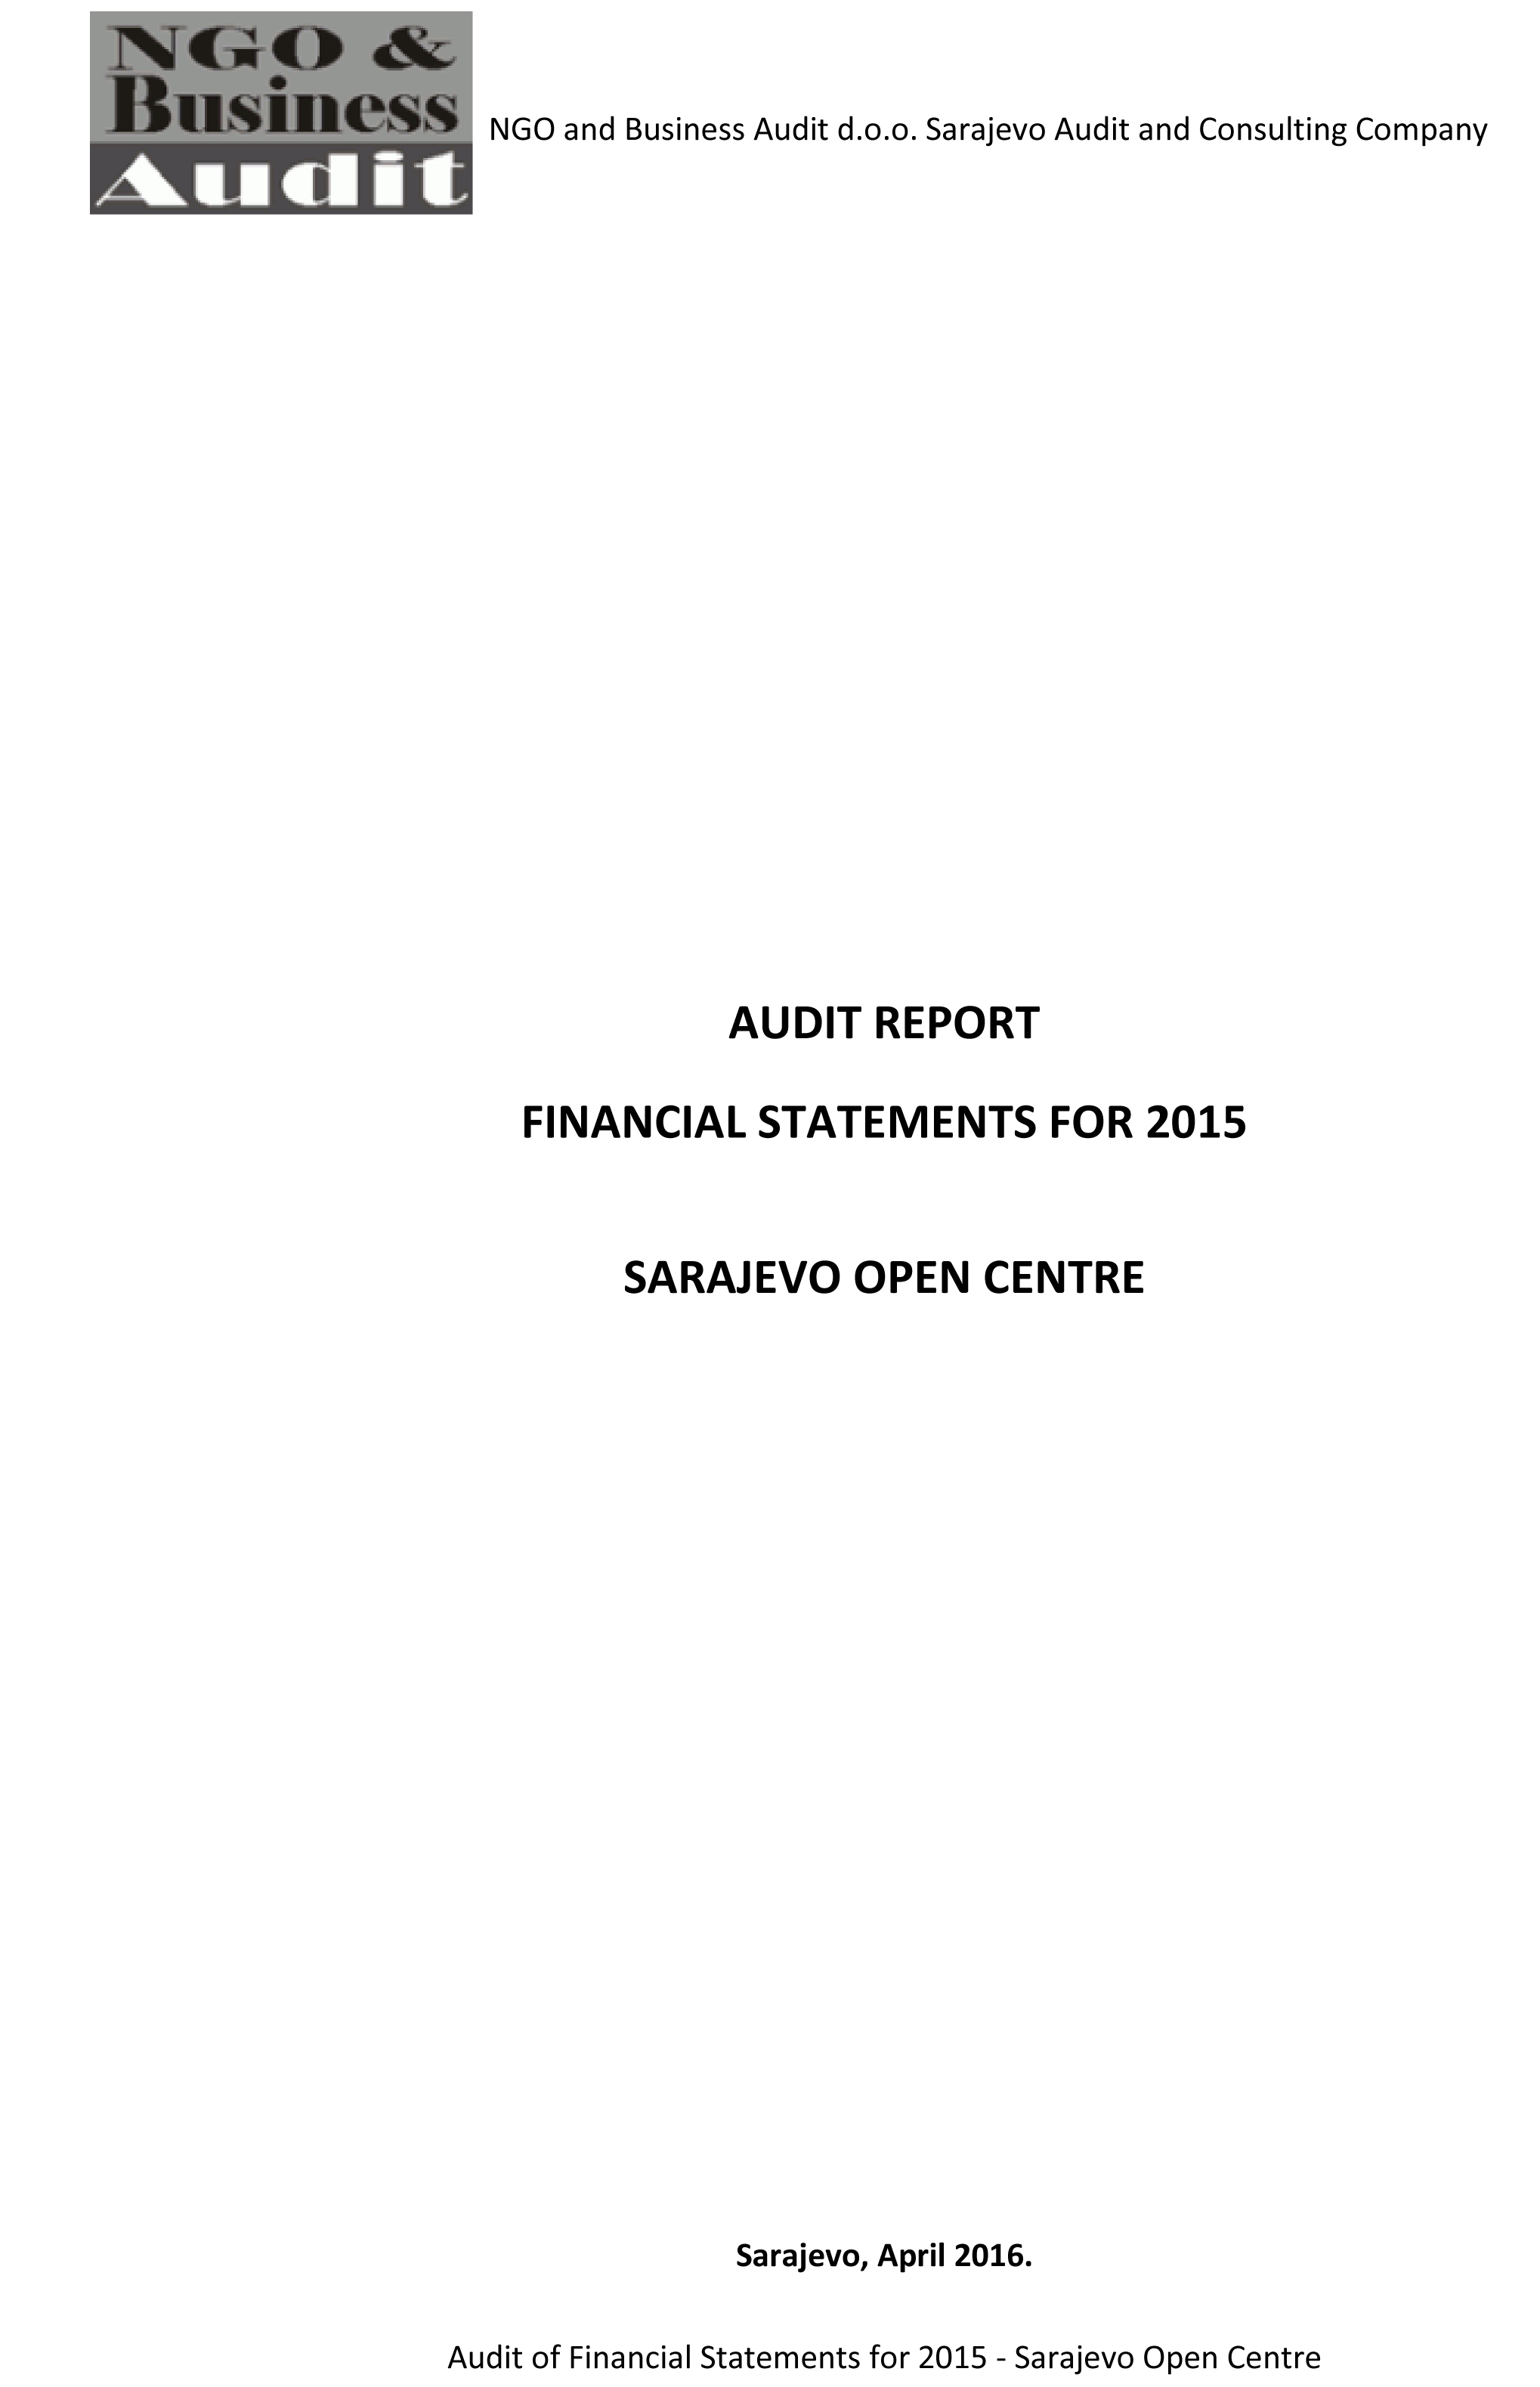 Final audit report SOC 2015 signed